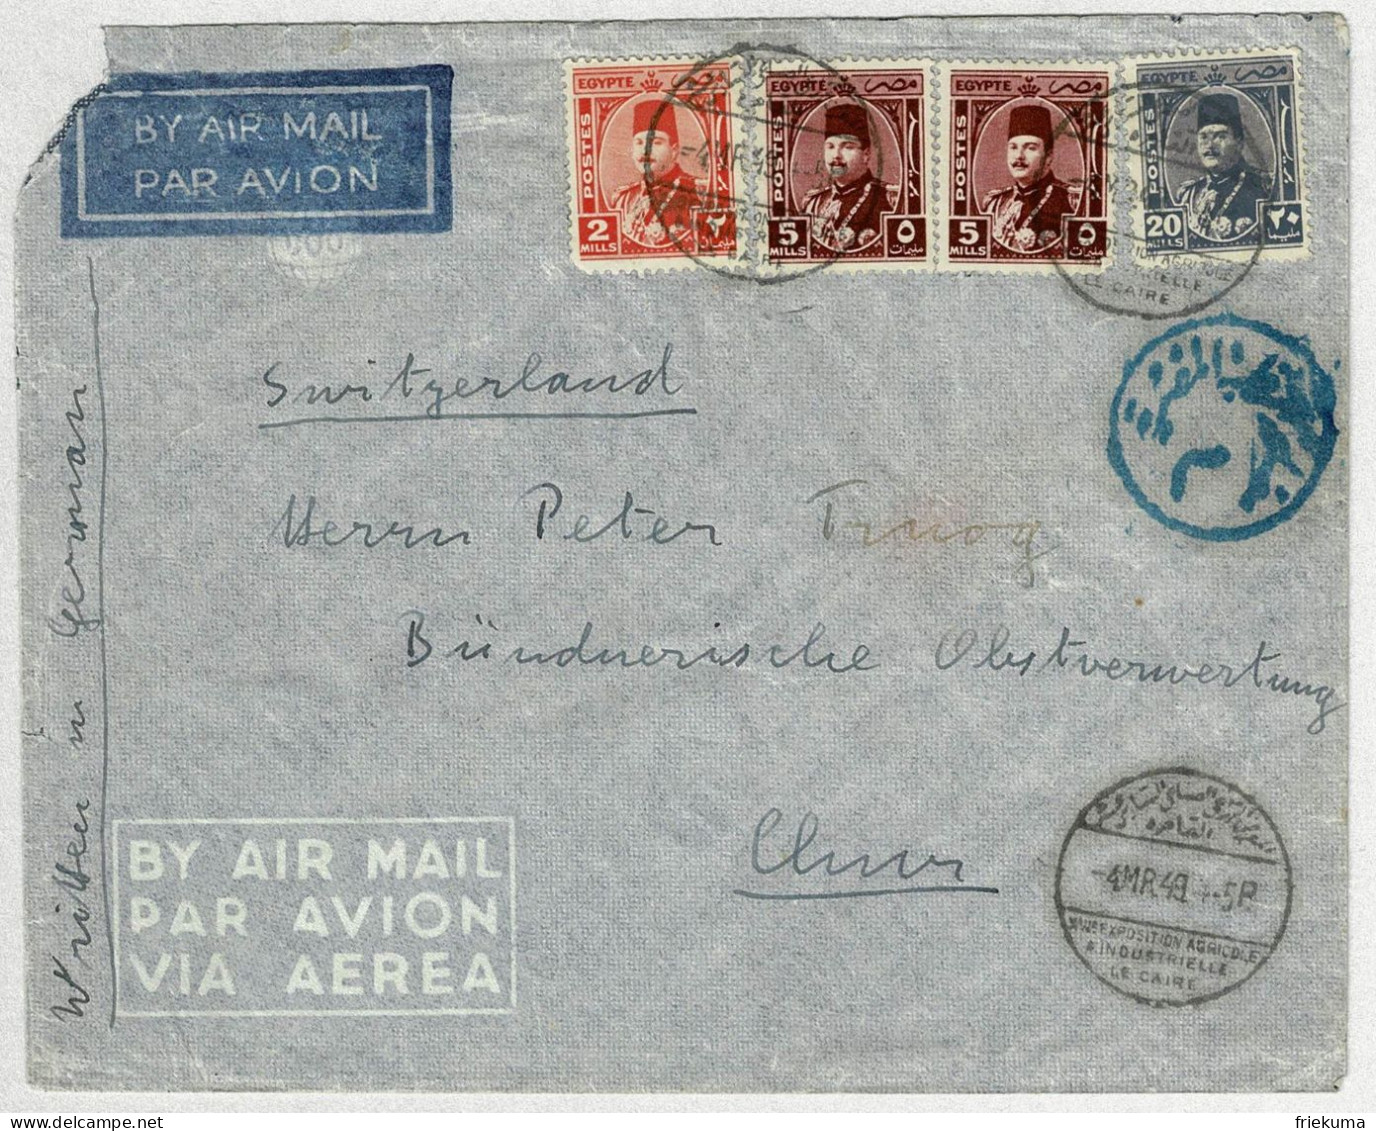 Aegypten / Postes Egypte 1949, Luftpostbrief / Air Mail Exposition Agricole & Industrielle Caire - Chur (Schweiz) - Lettres & Documents